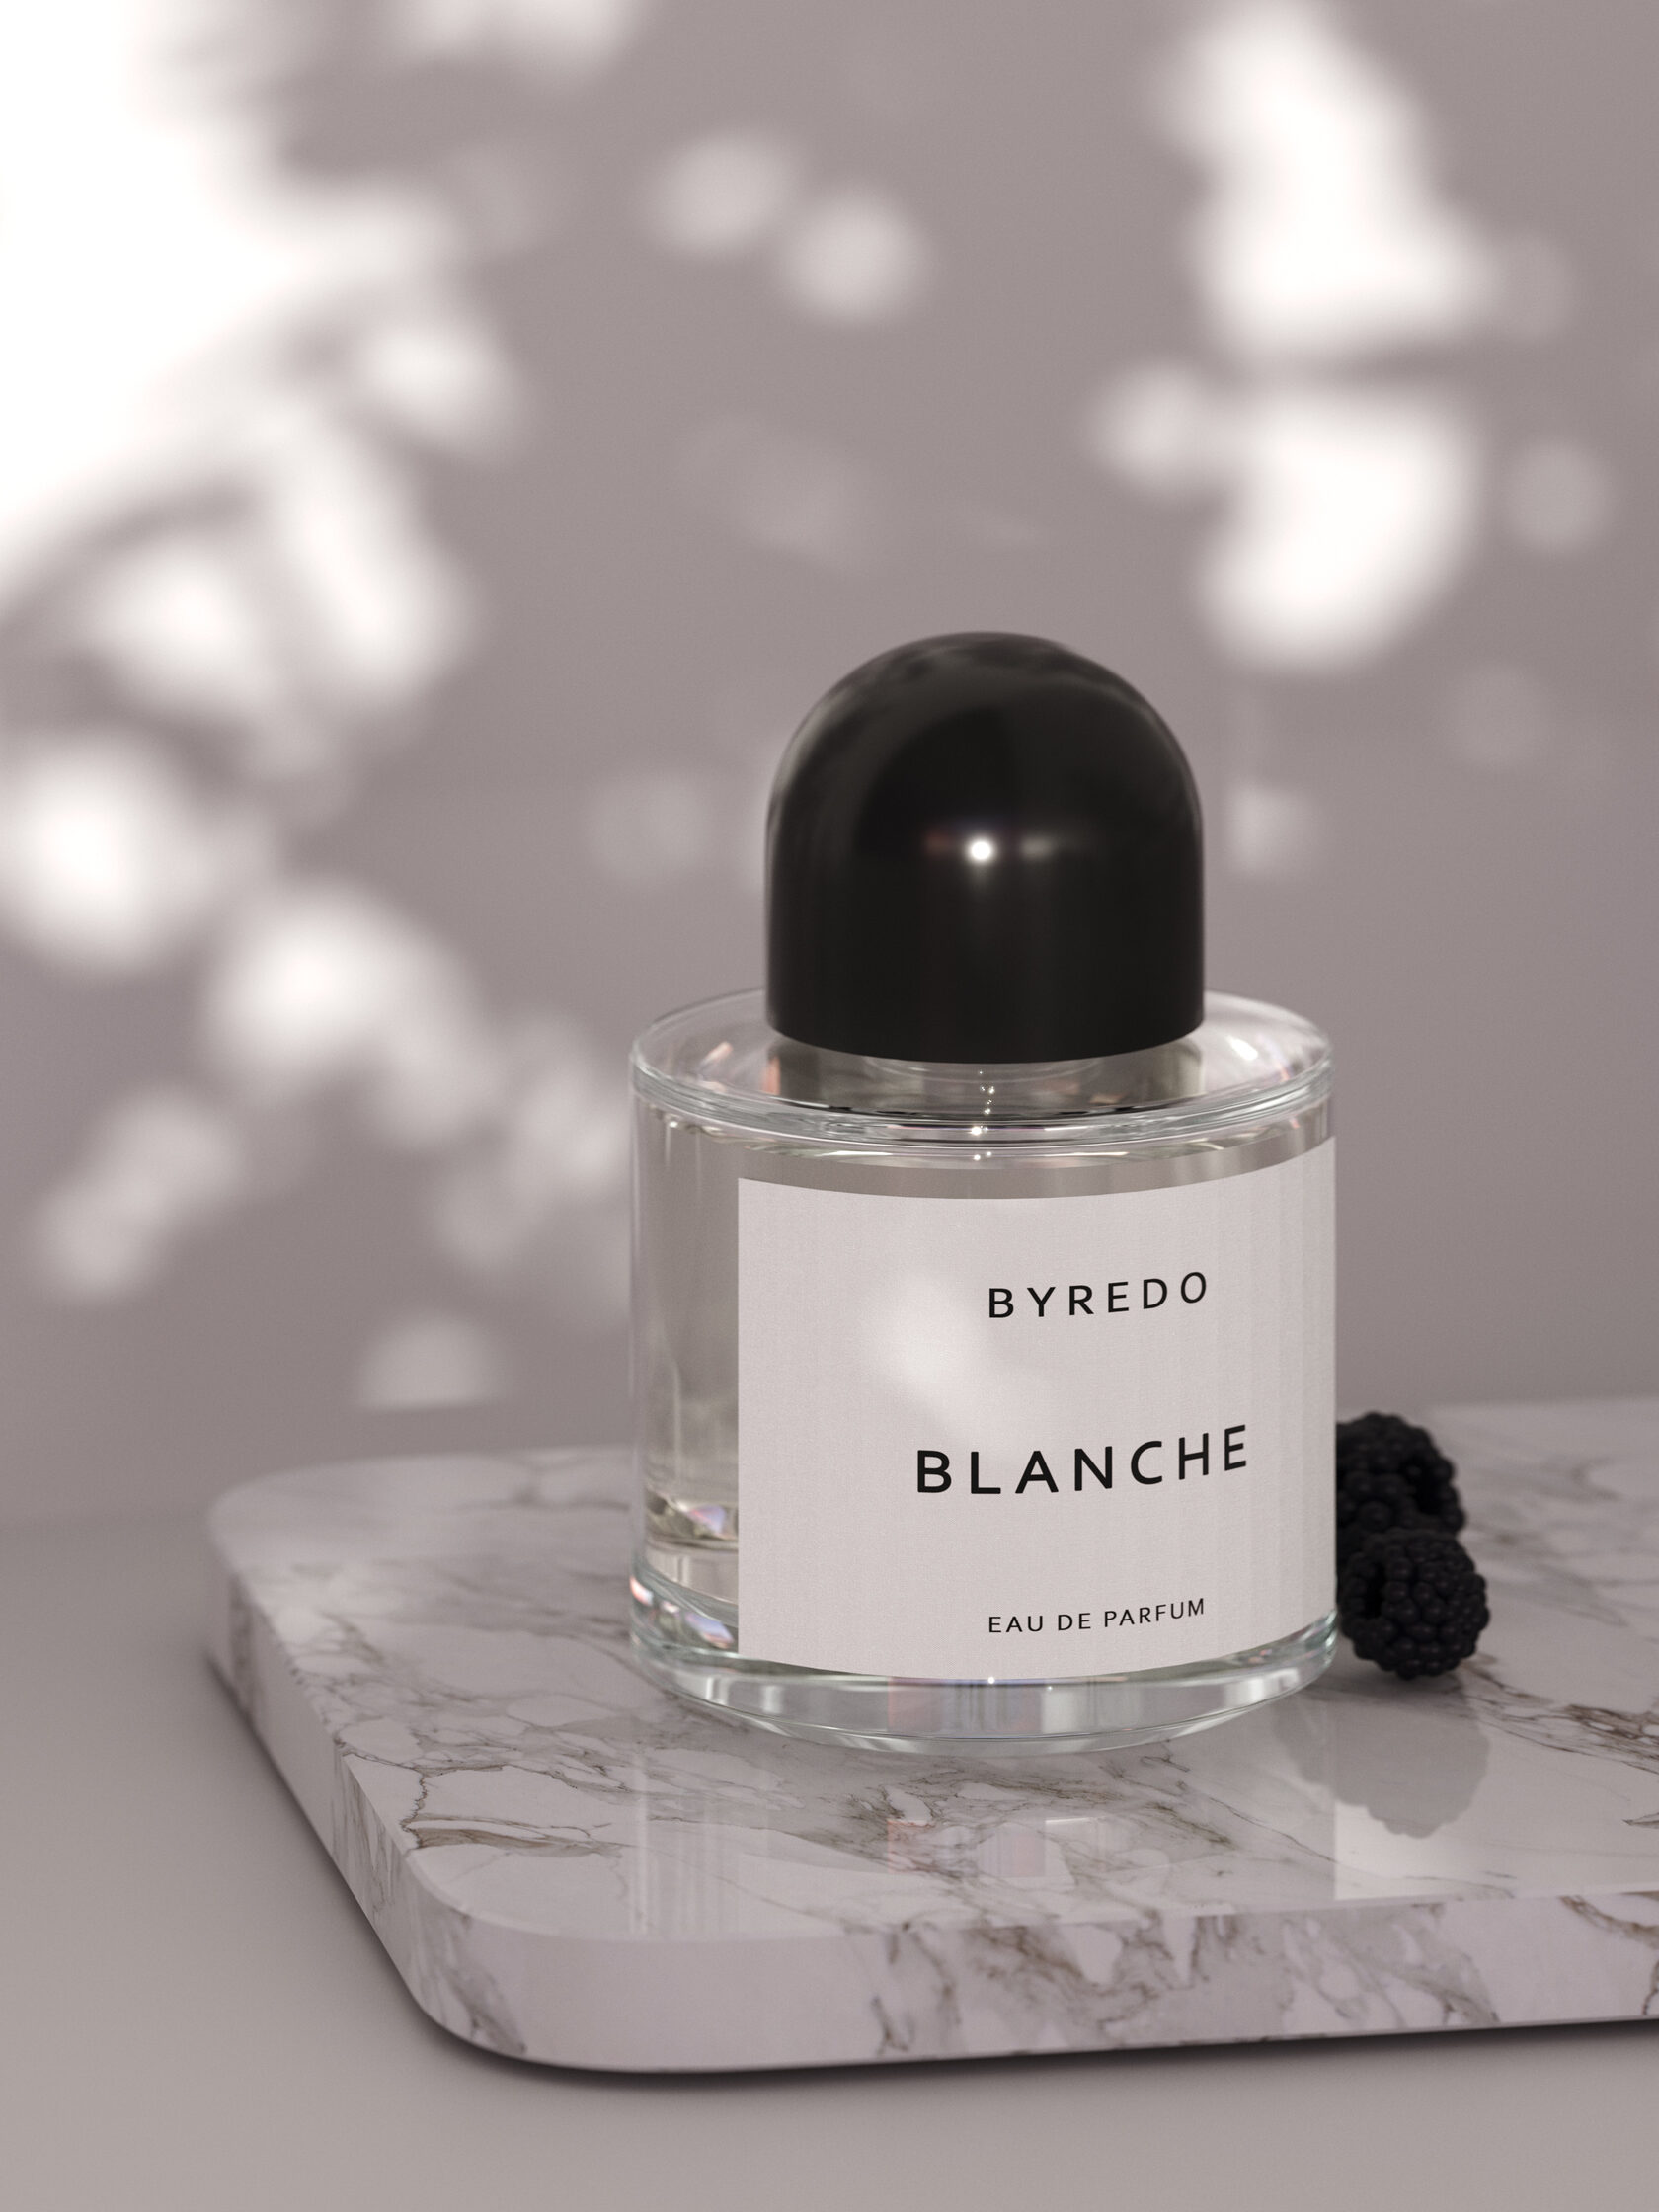 Аромат blanche byredo. Byredo Blanche. Blanche от Byredo. Byredo Blanche Limited Edition 2021. Байредо Бланш духи.